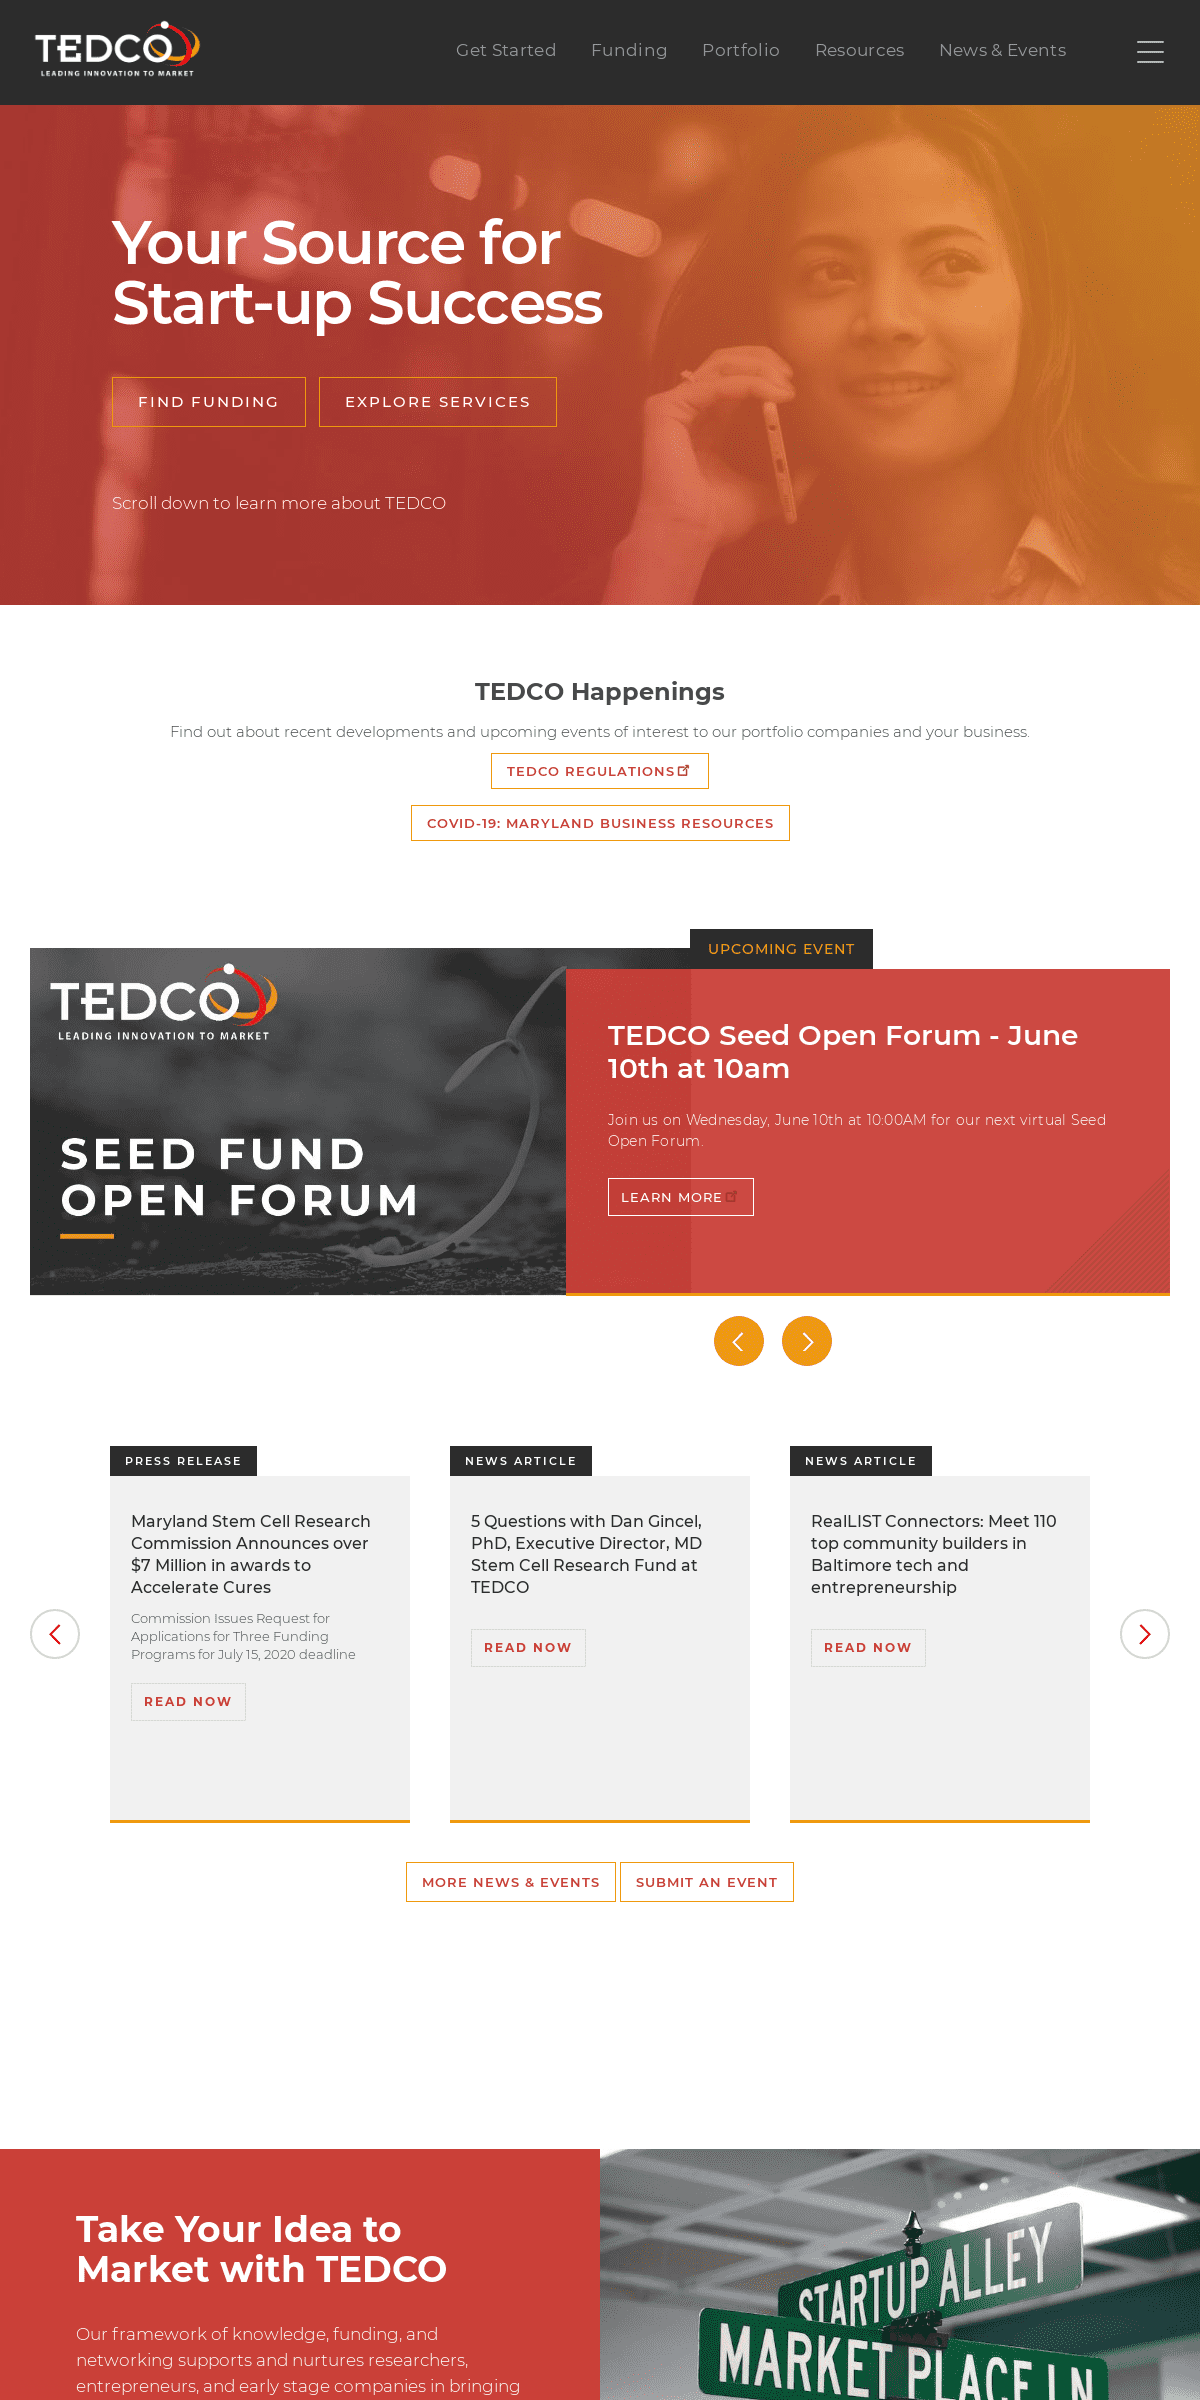 A complete backup of tedcomd.com